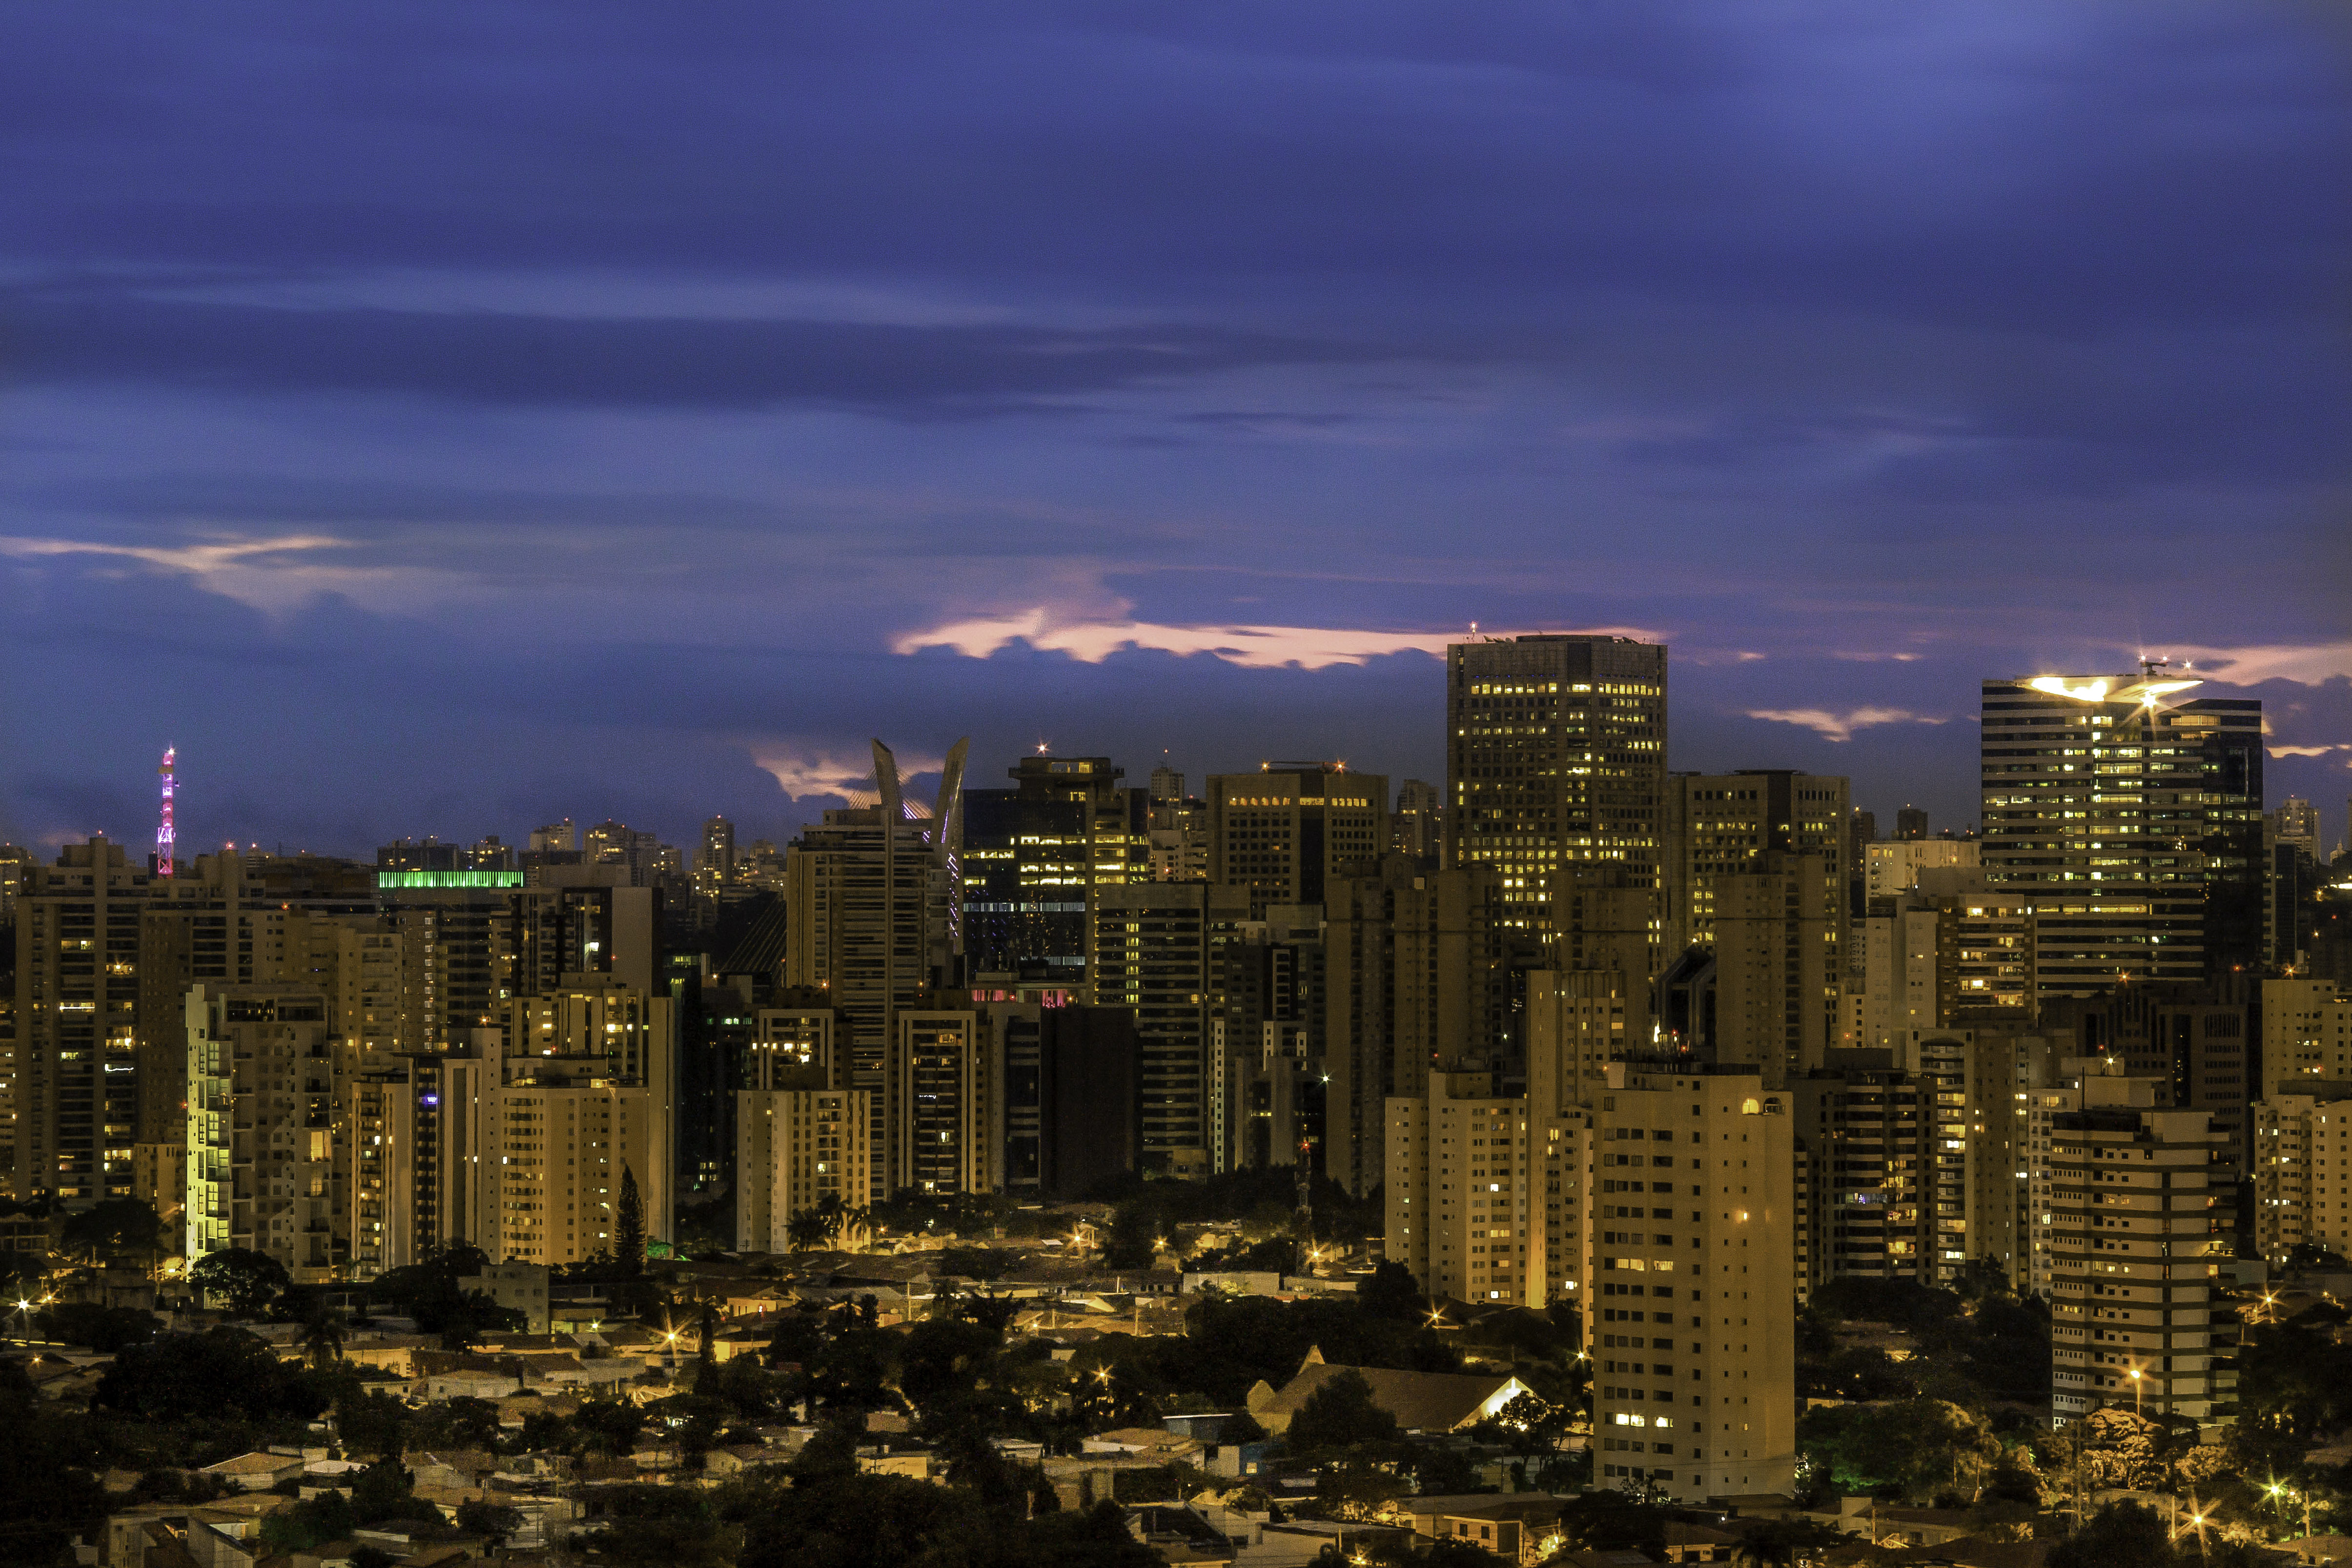 Commercial buildings in Brooklin Novo, Sao Paulo, Brazil image - Free stock photo - Public ...